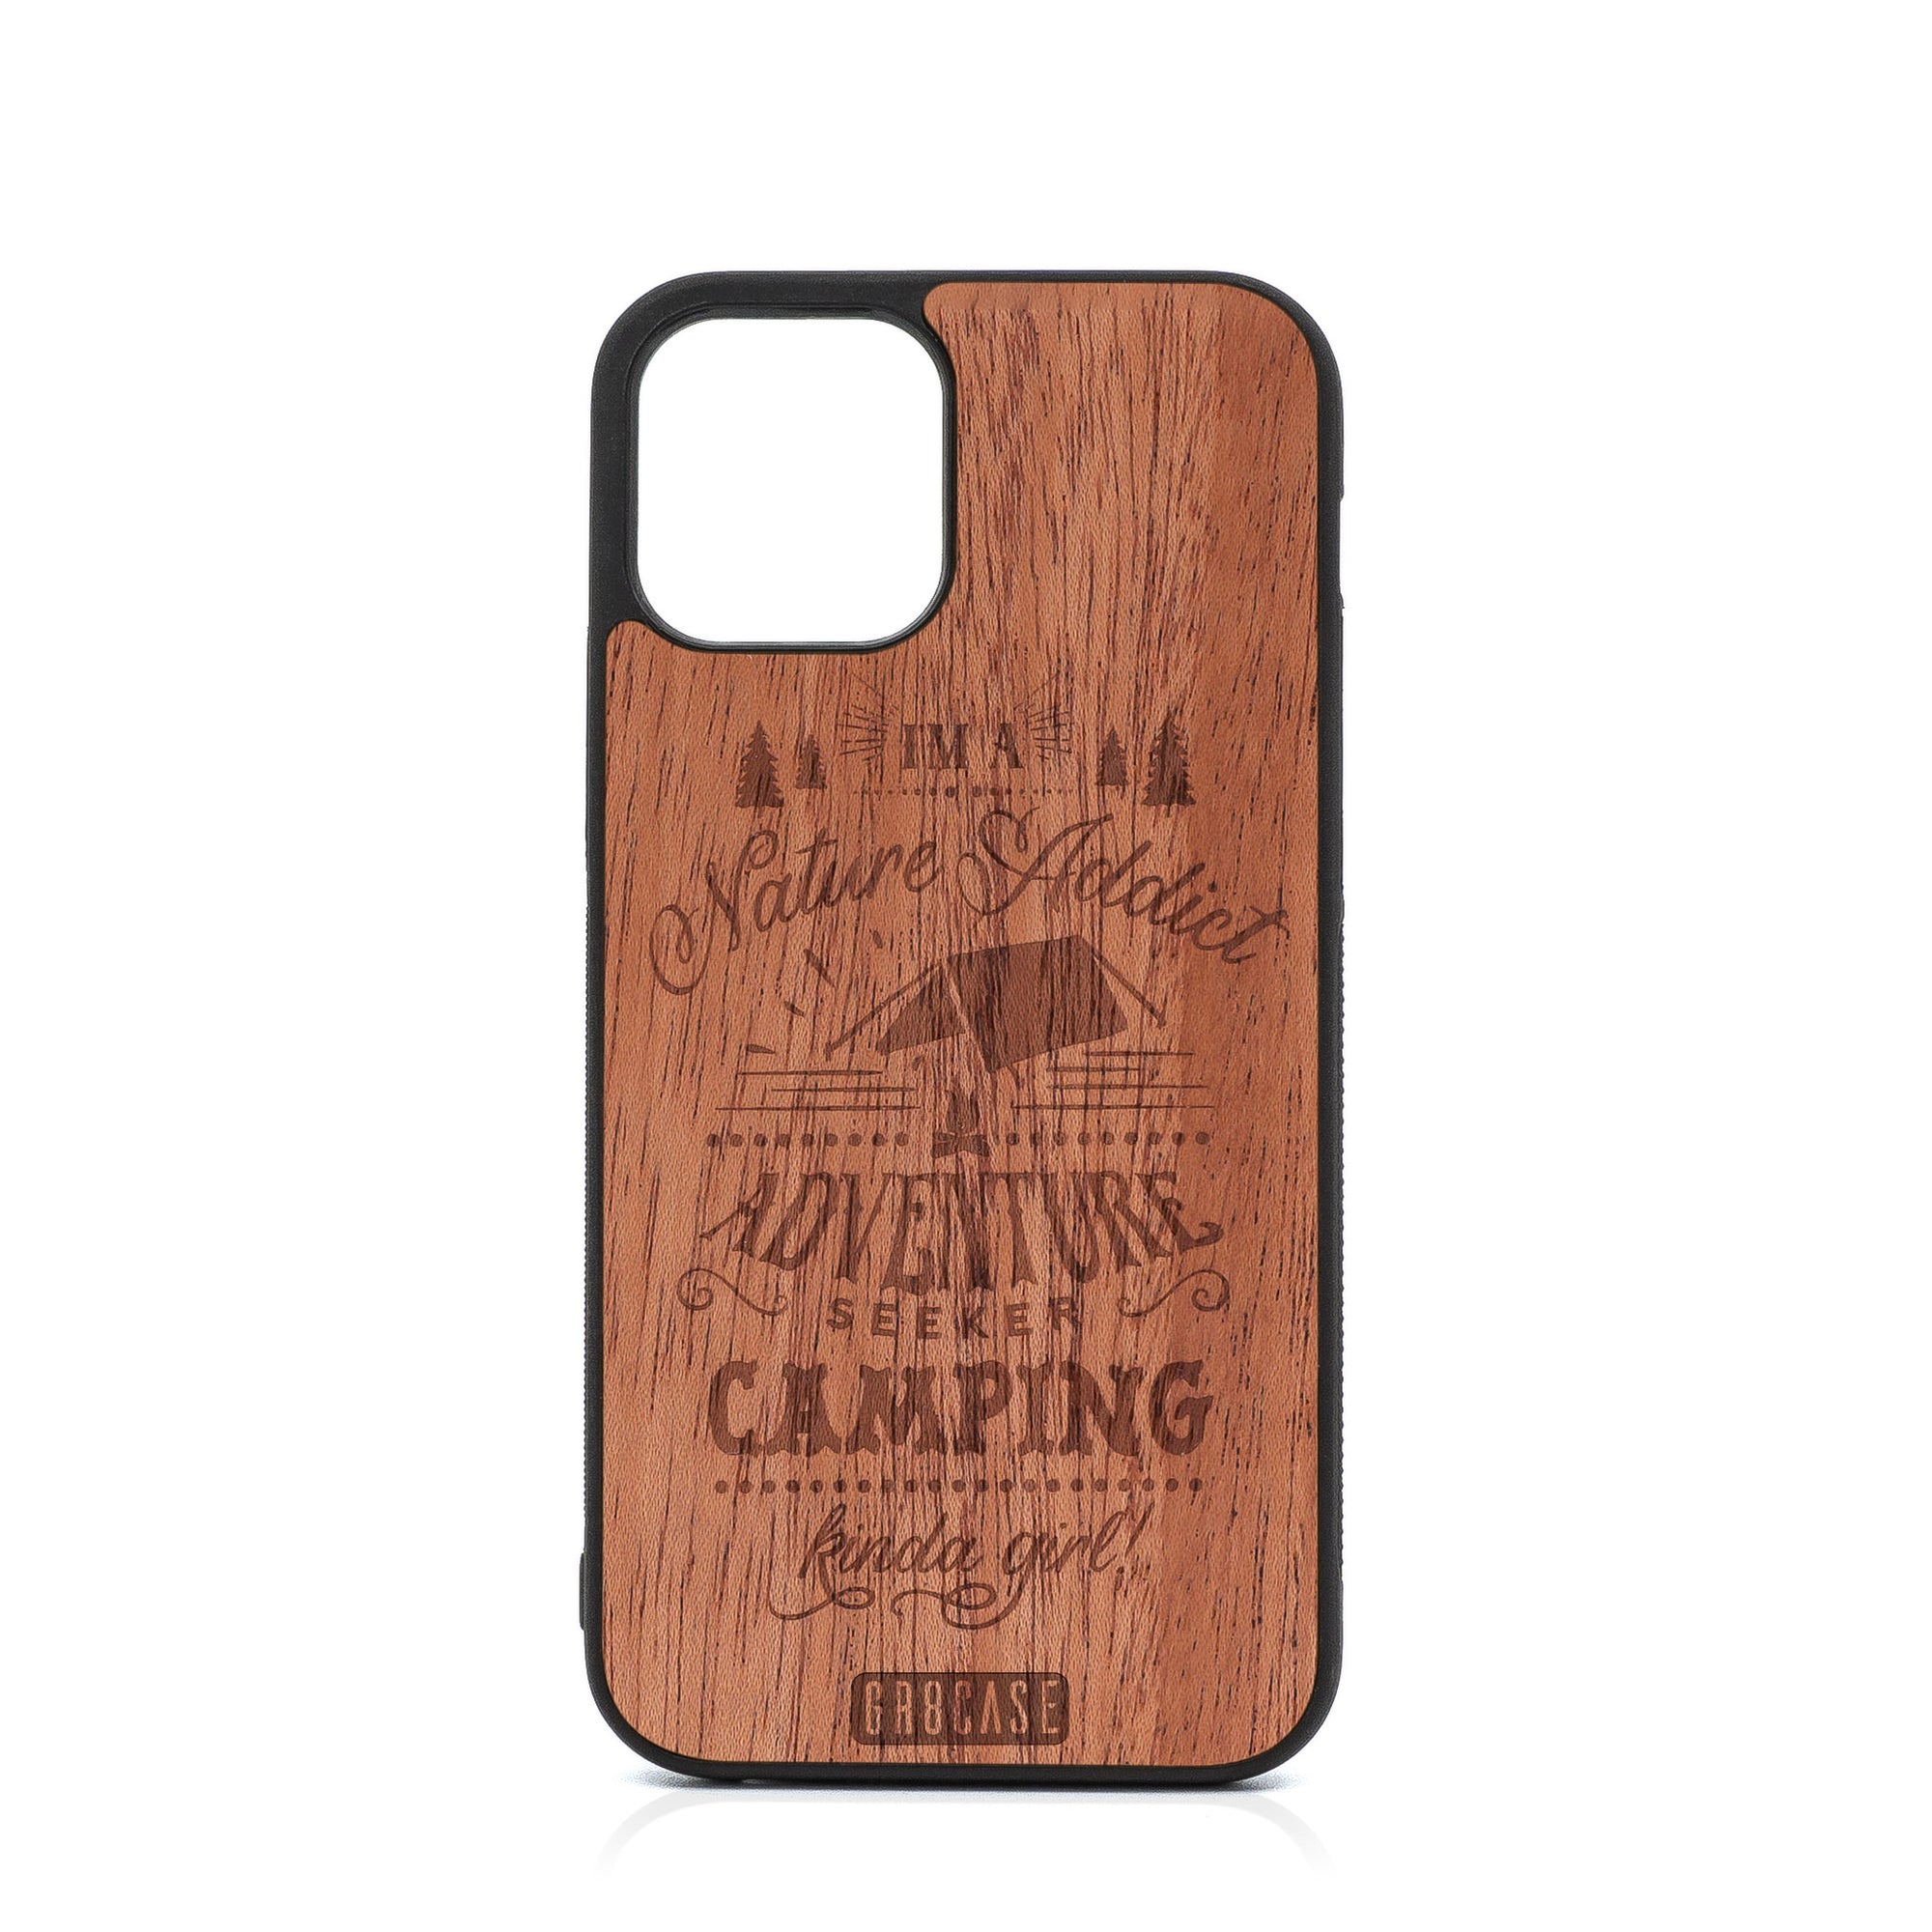 I'm A Nature Addict Adventure Seeker Camping Kinda Girl Design Wood Case For iPhone 12